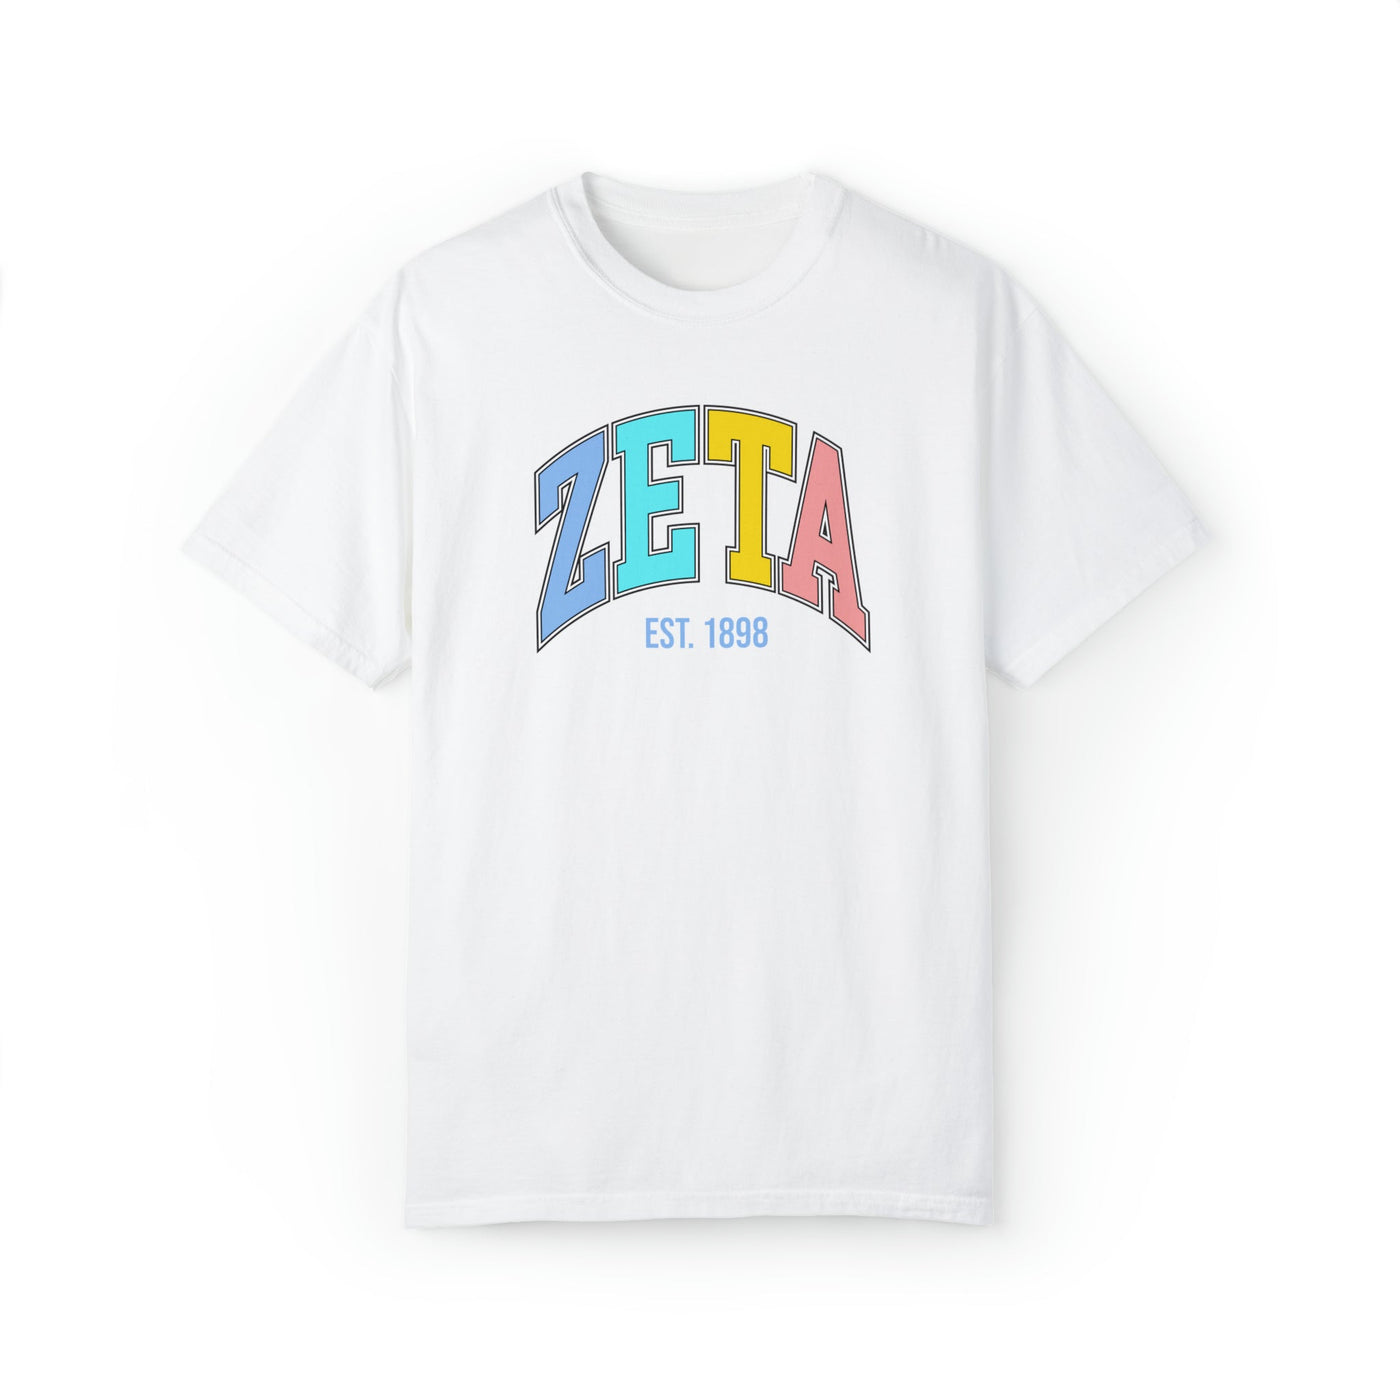 Zeta Tau Alpha Pastel Varsity Sorority T-shirt